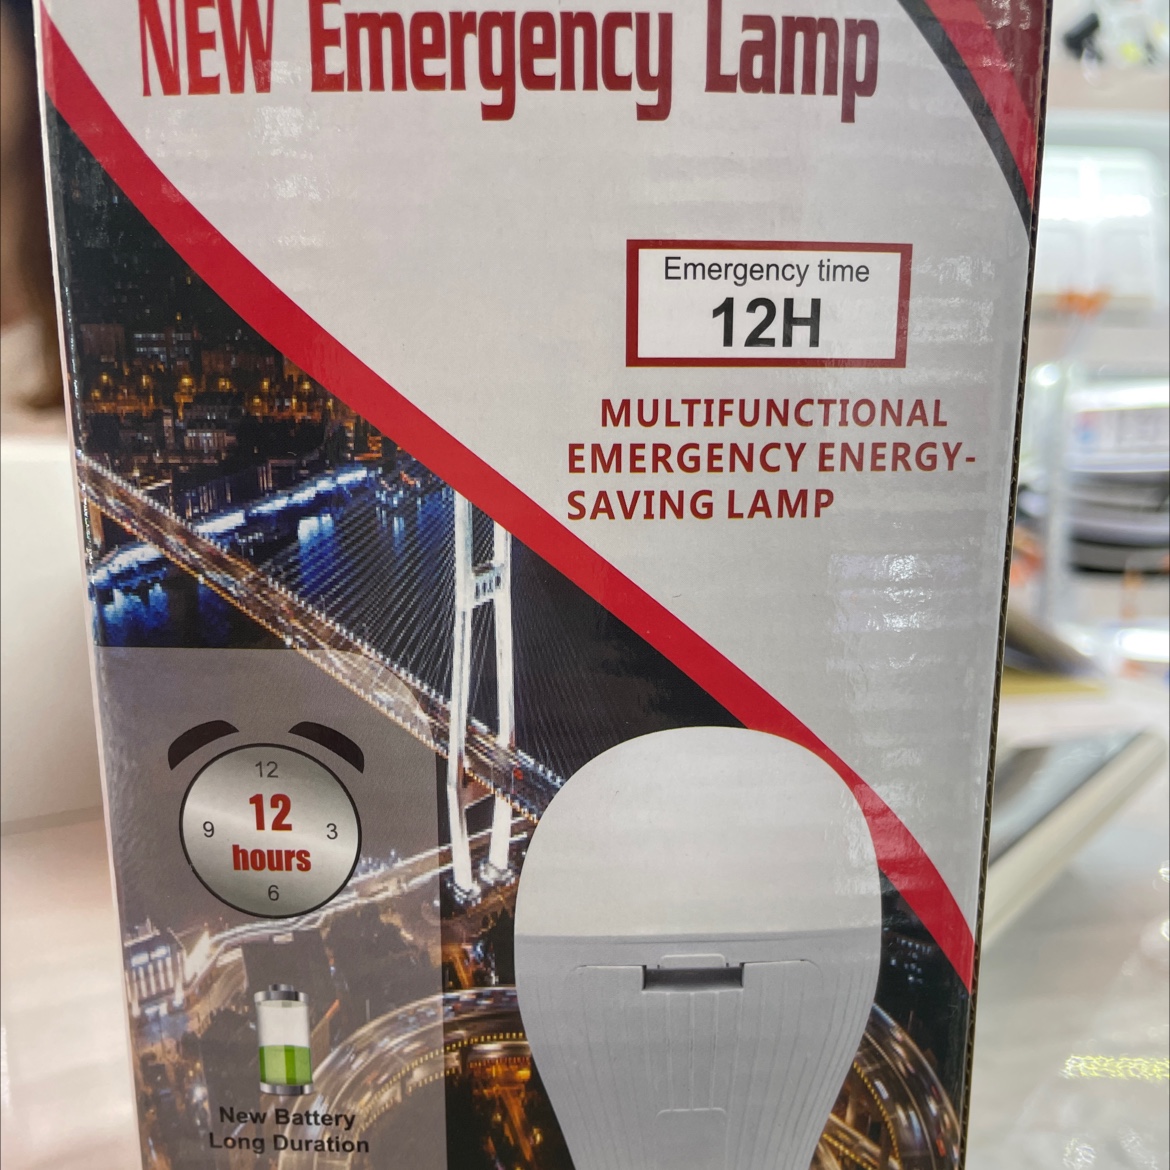 New emergency Lamp1
